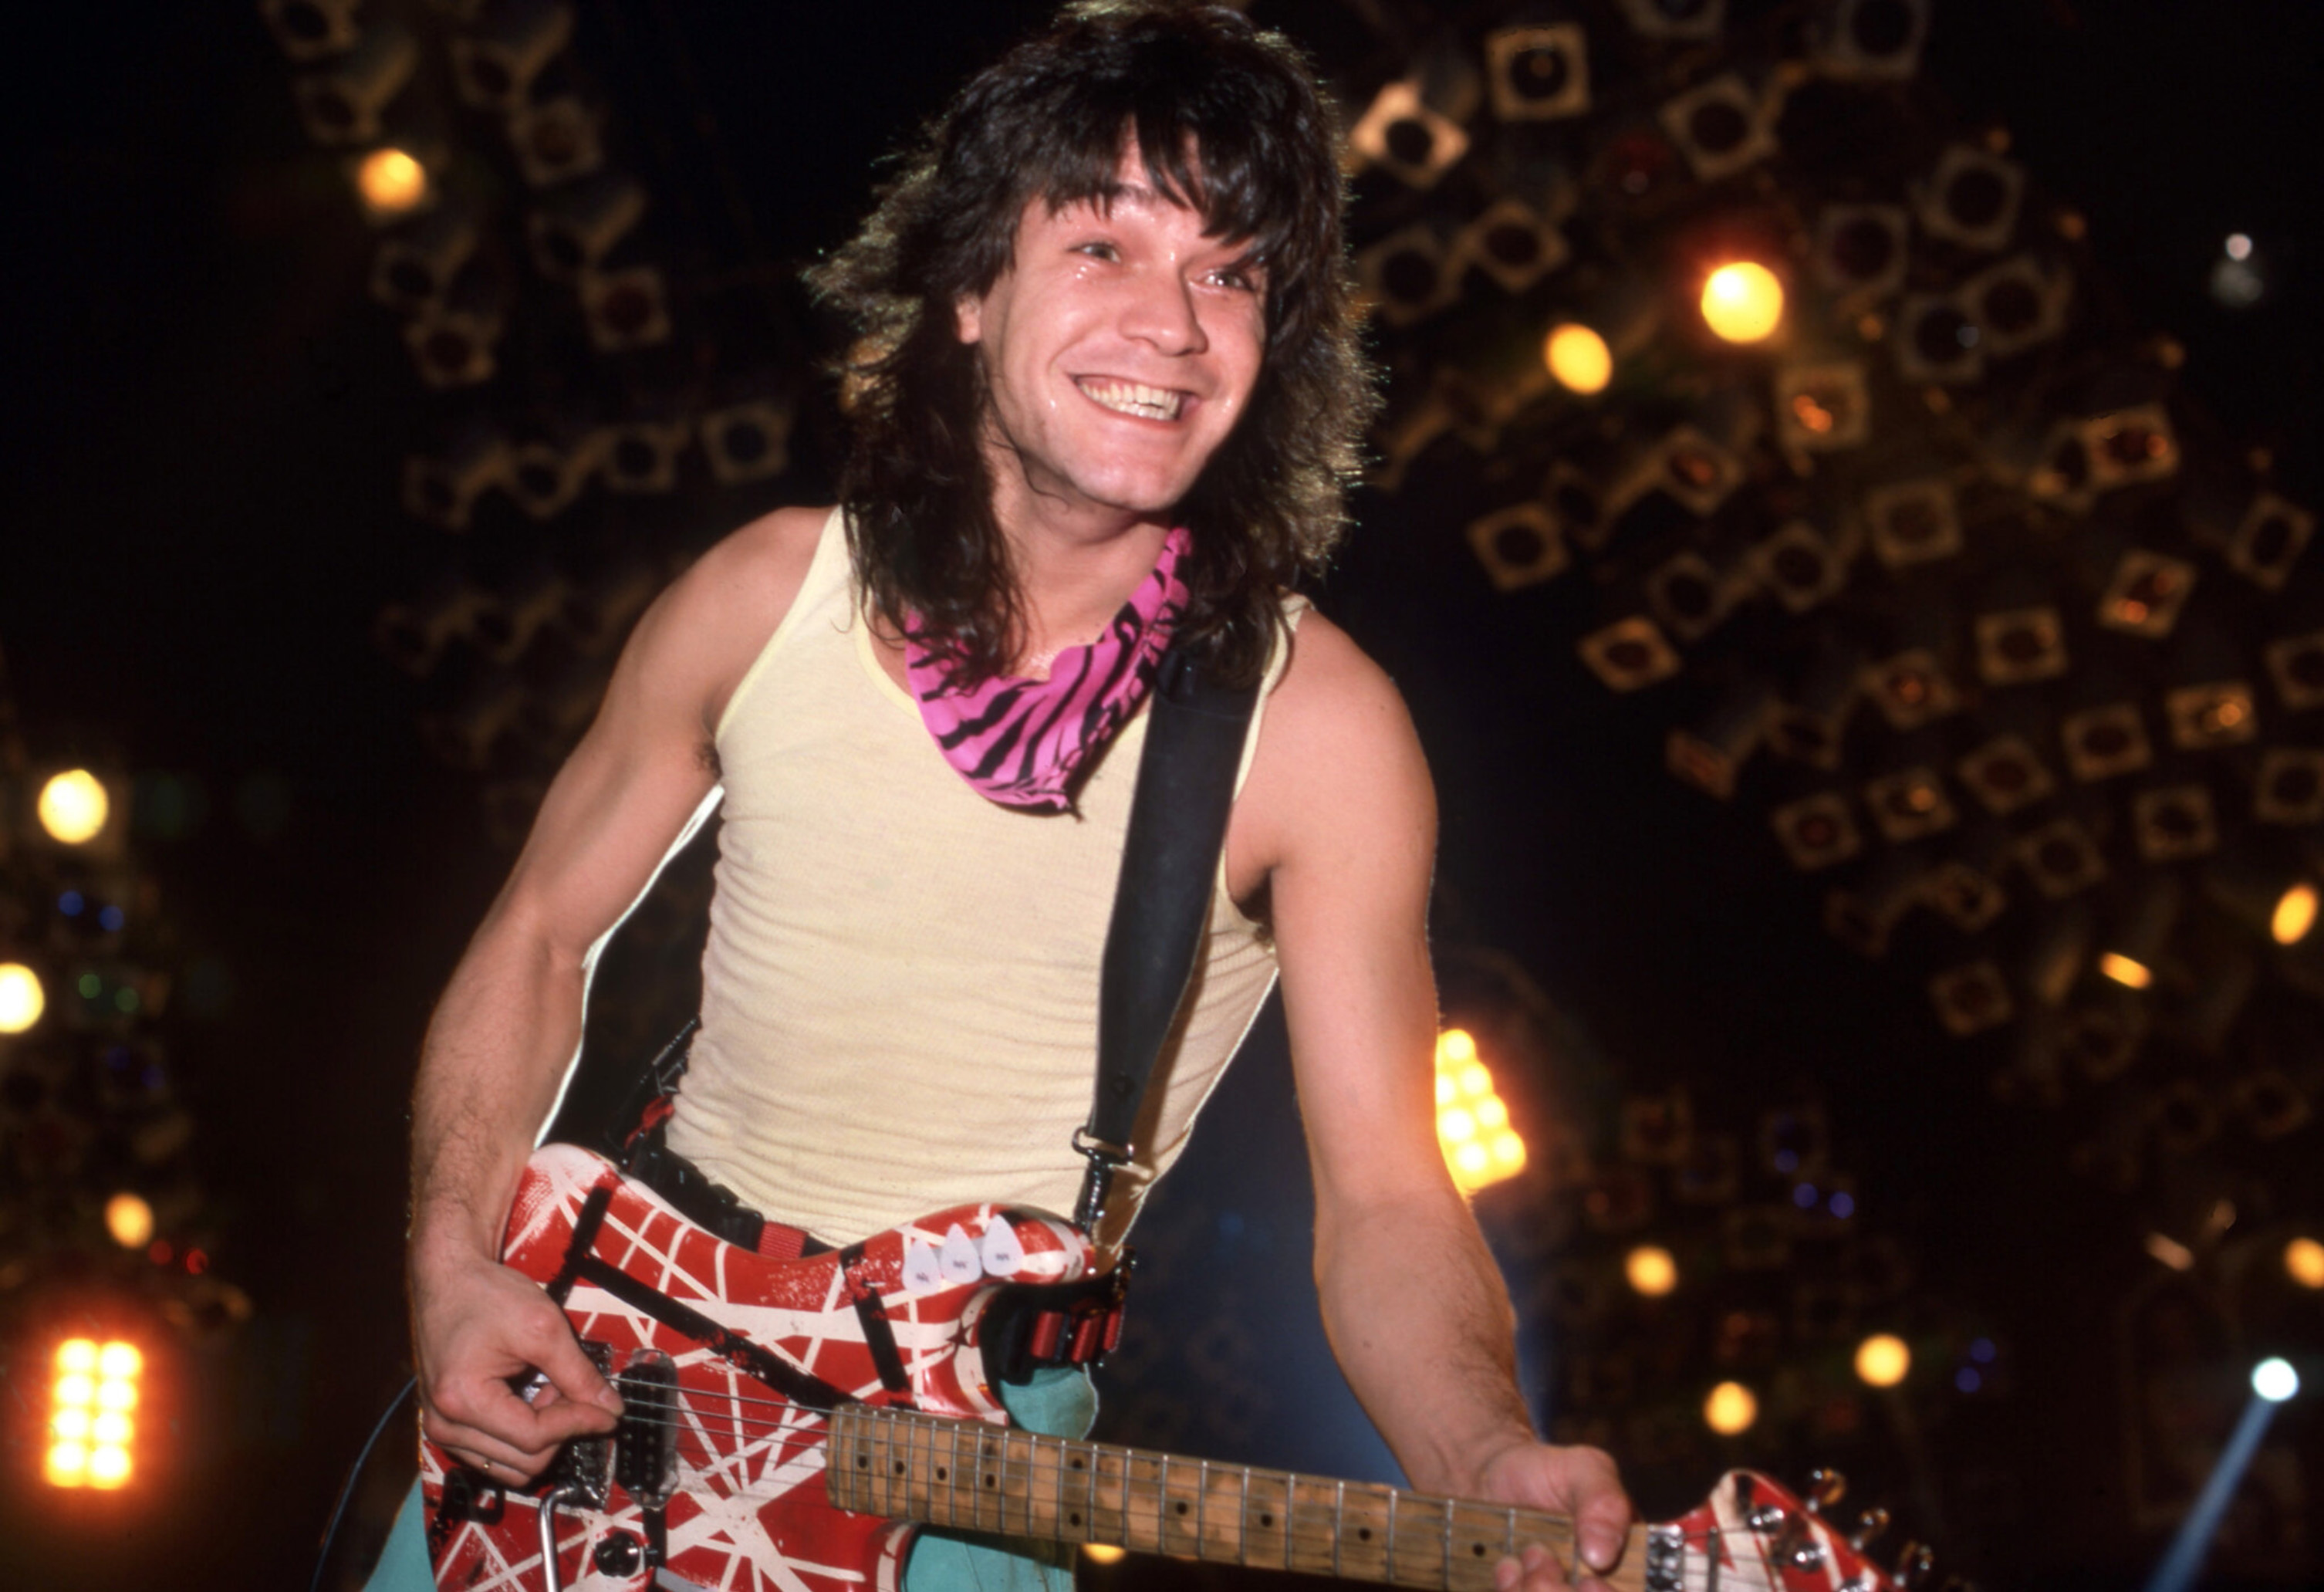 Eddie Van Halen, 1955-2020.